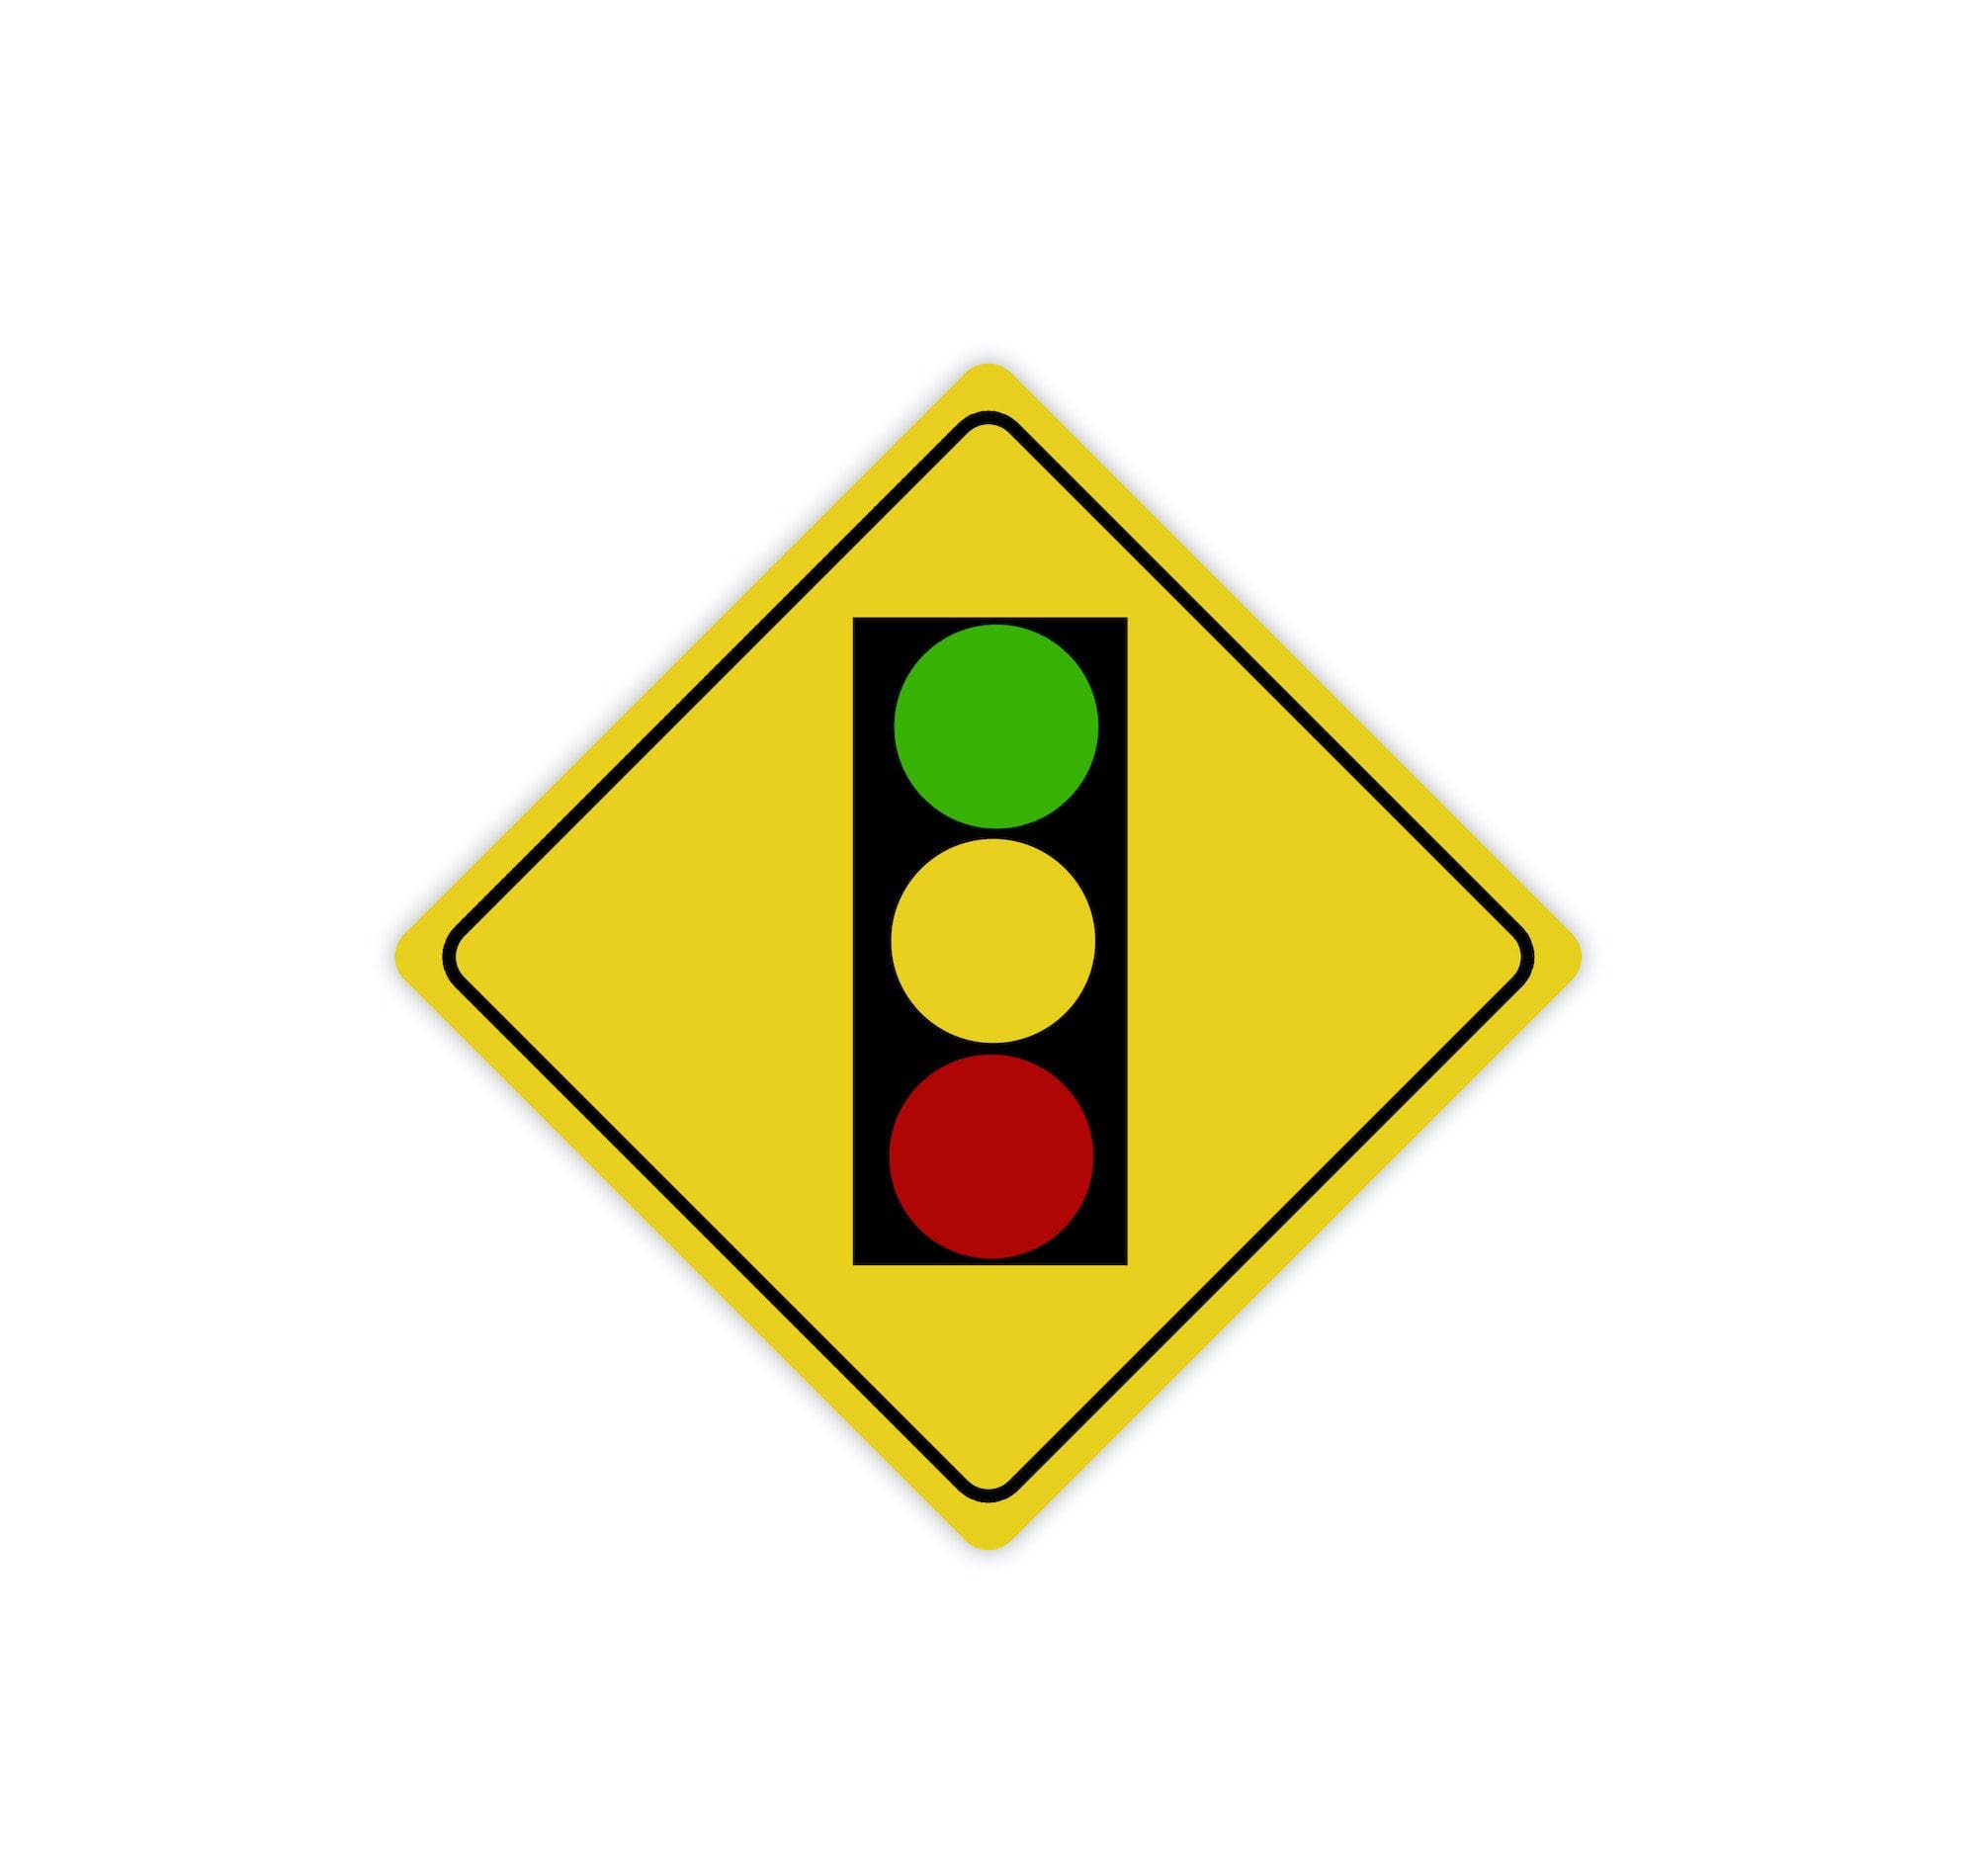 semaphore traffic light isolated